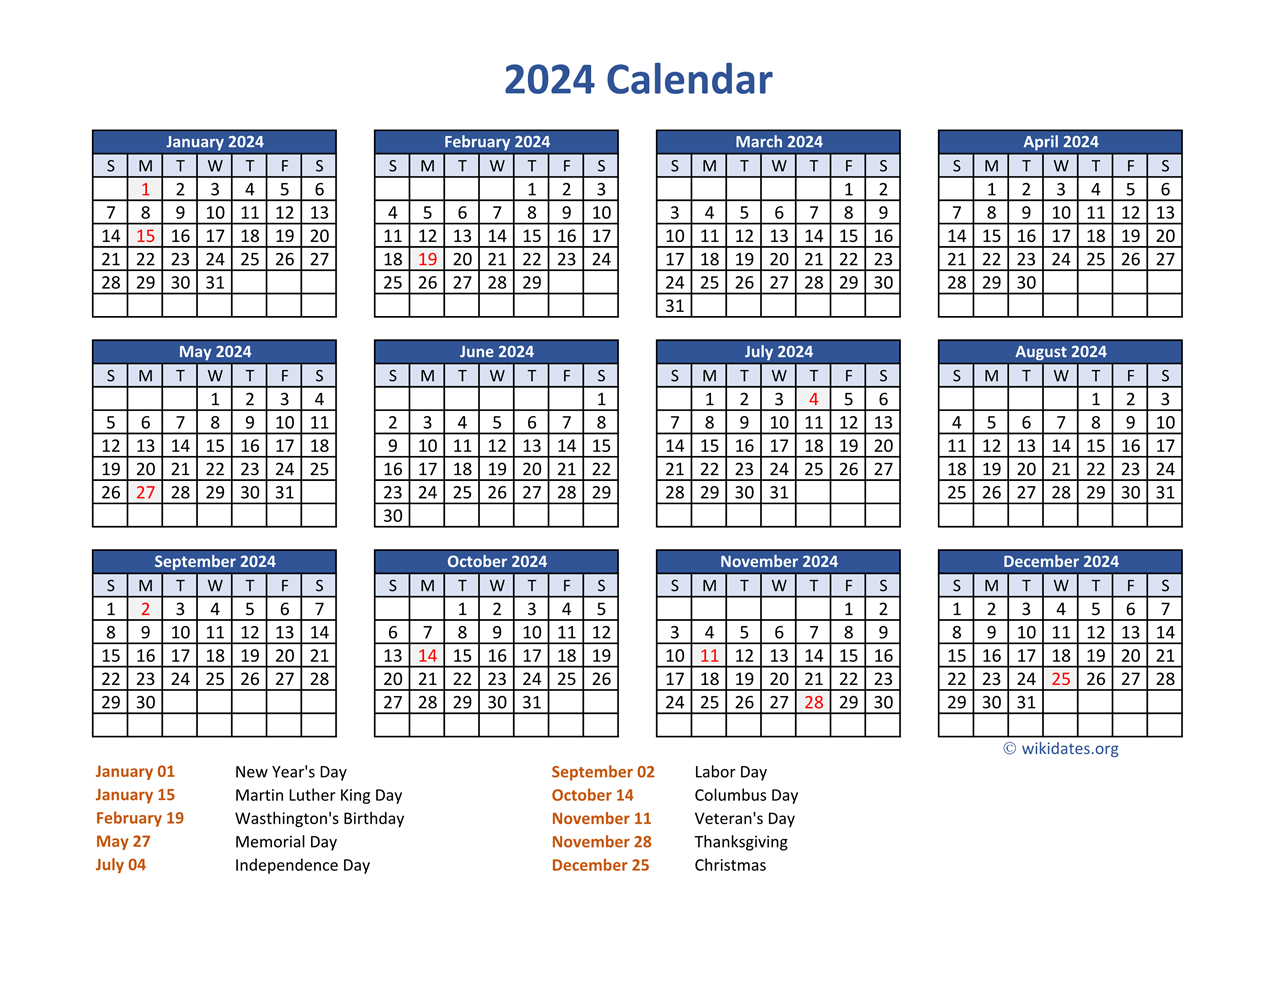 Pdf Calendar 2024 With Federal Holidays | Wikidates | 2024 Printable Calendar One Page With Federal Holidays